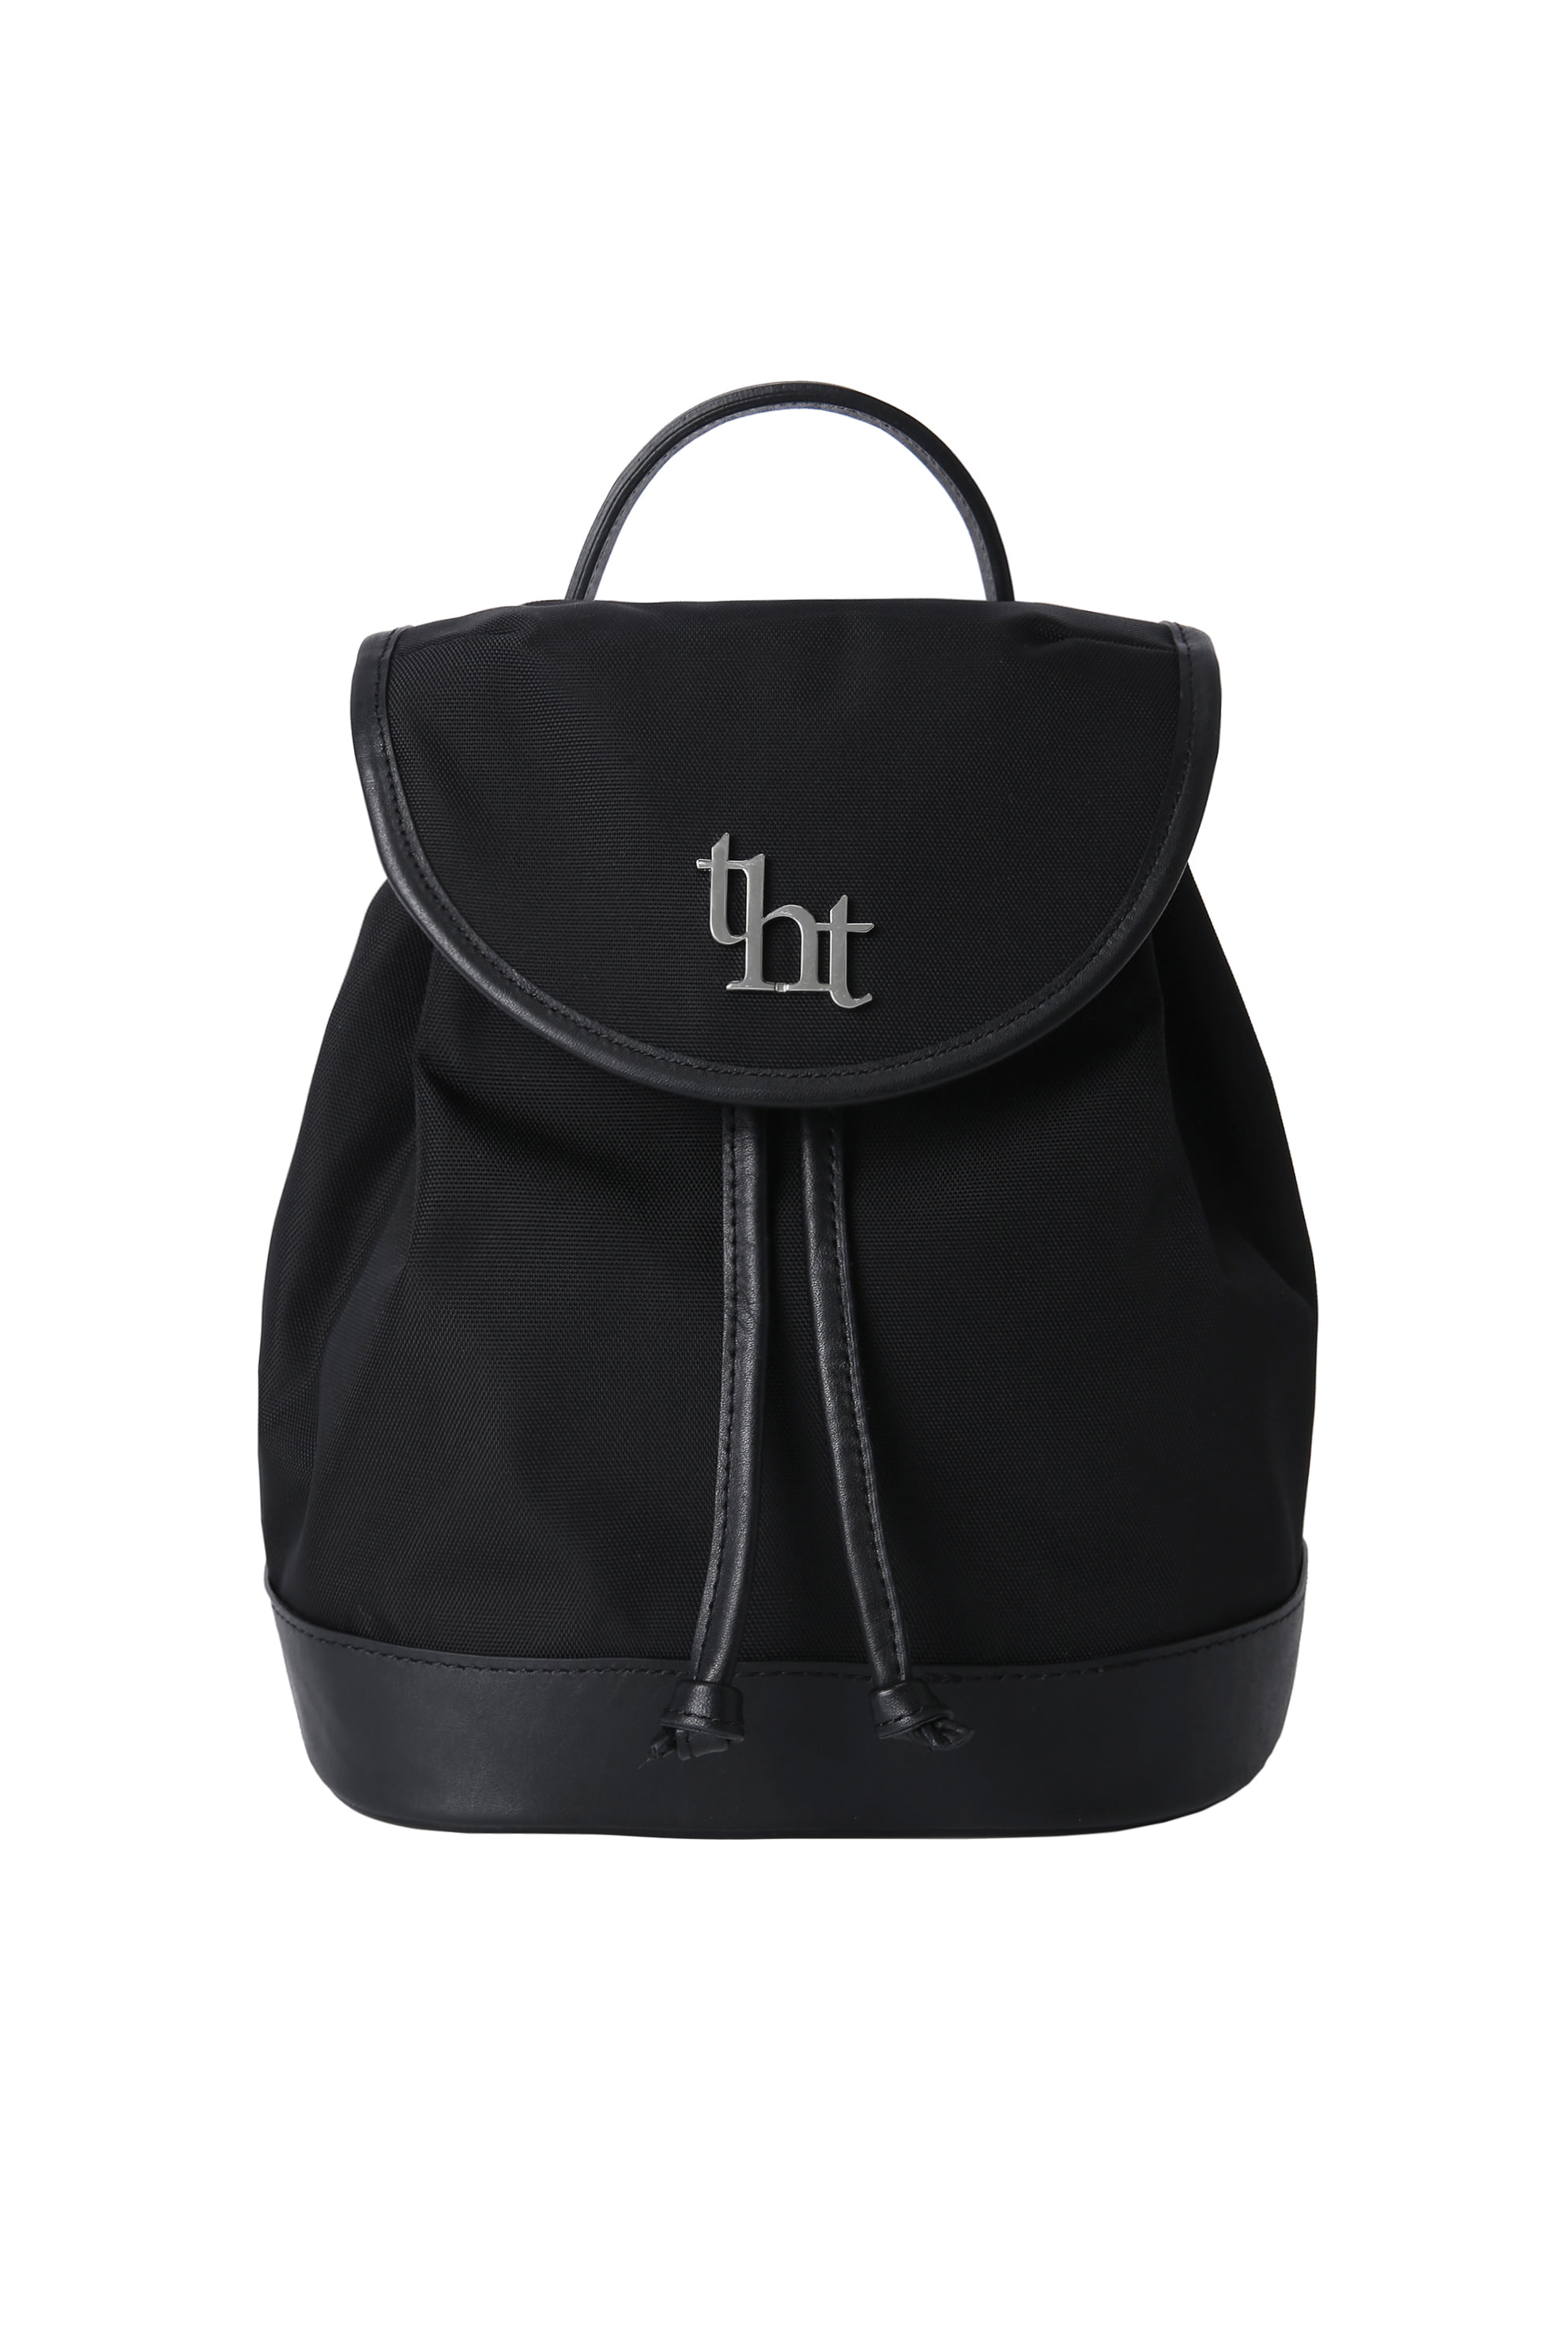 [4th Pre-order] Acorn backpack